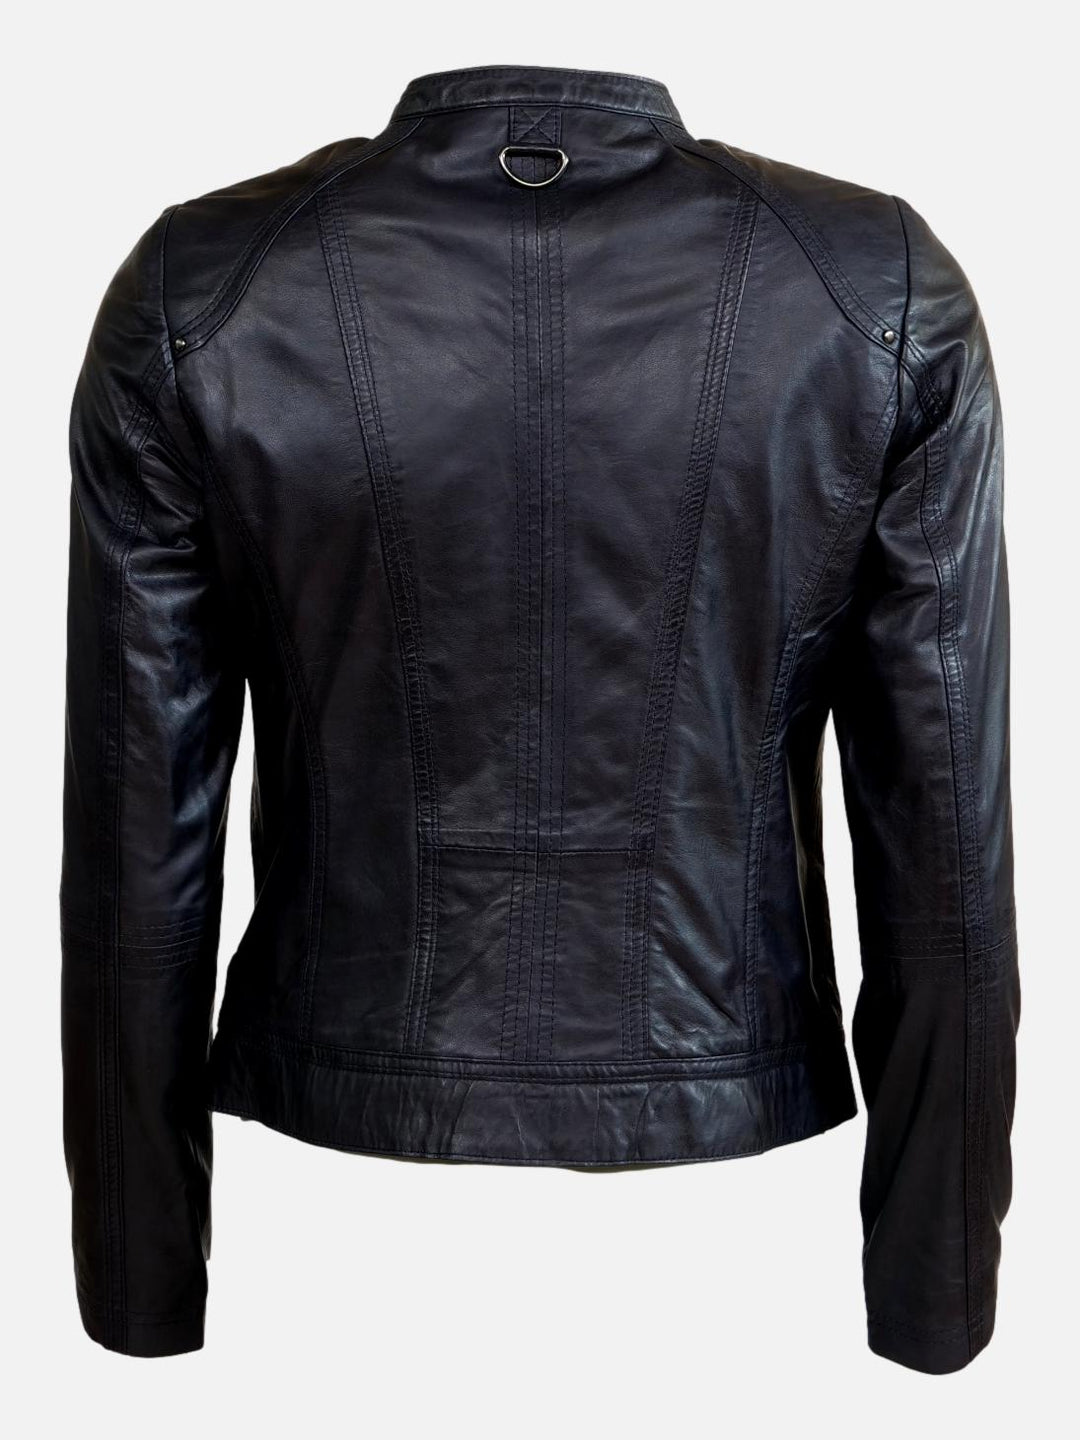 Previa - Comfort - Lamb Malli Leather - Jacket - Women - Navy